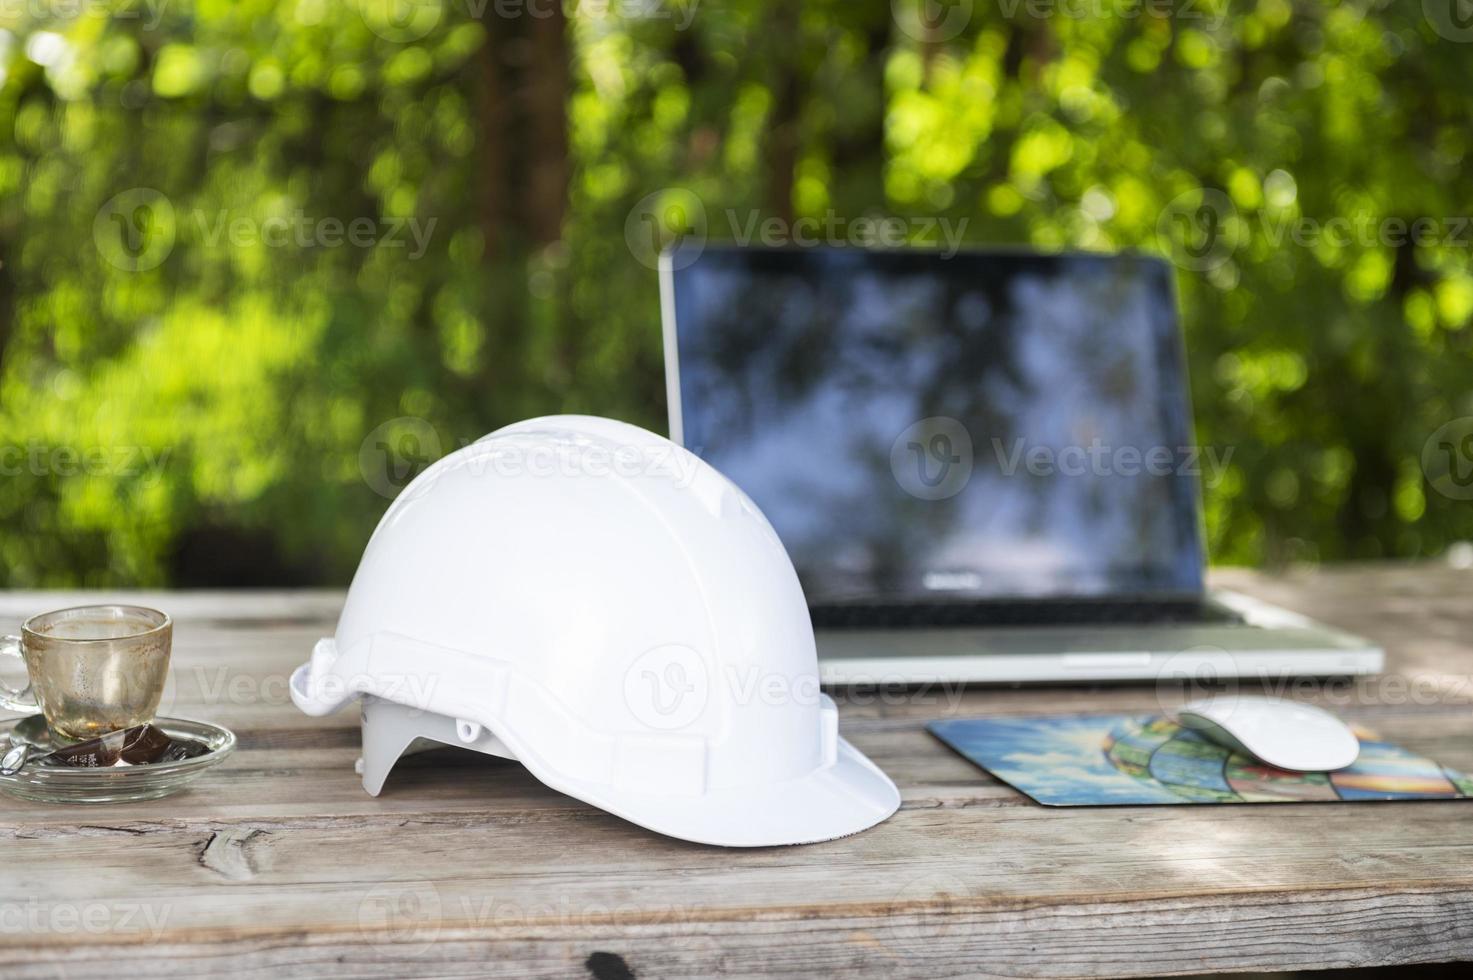 wit helm en computer Bij cafe met zonlicht achtergrond, ingenieur visie zittend bouw planning foto